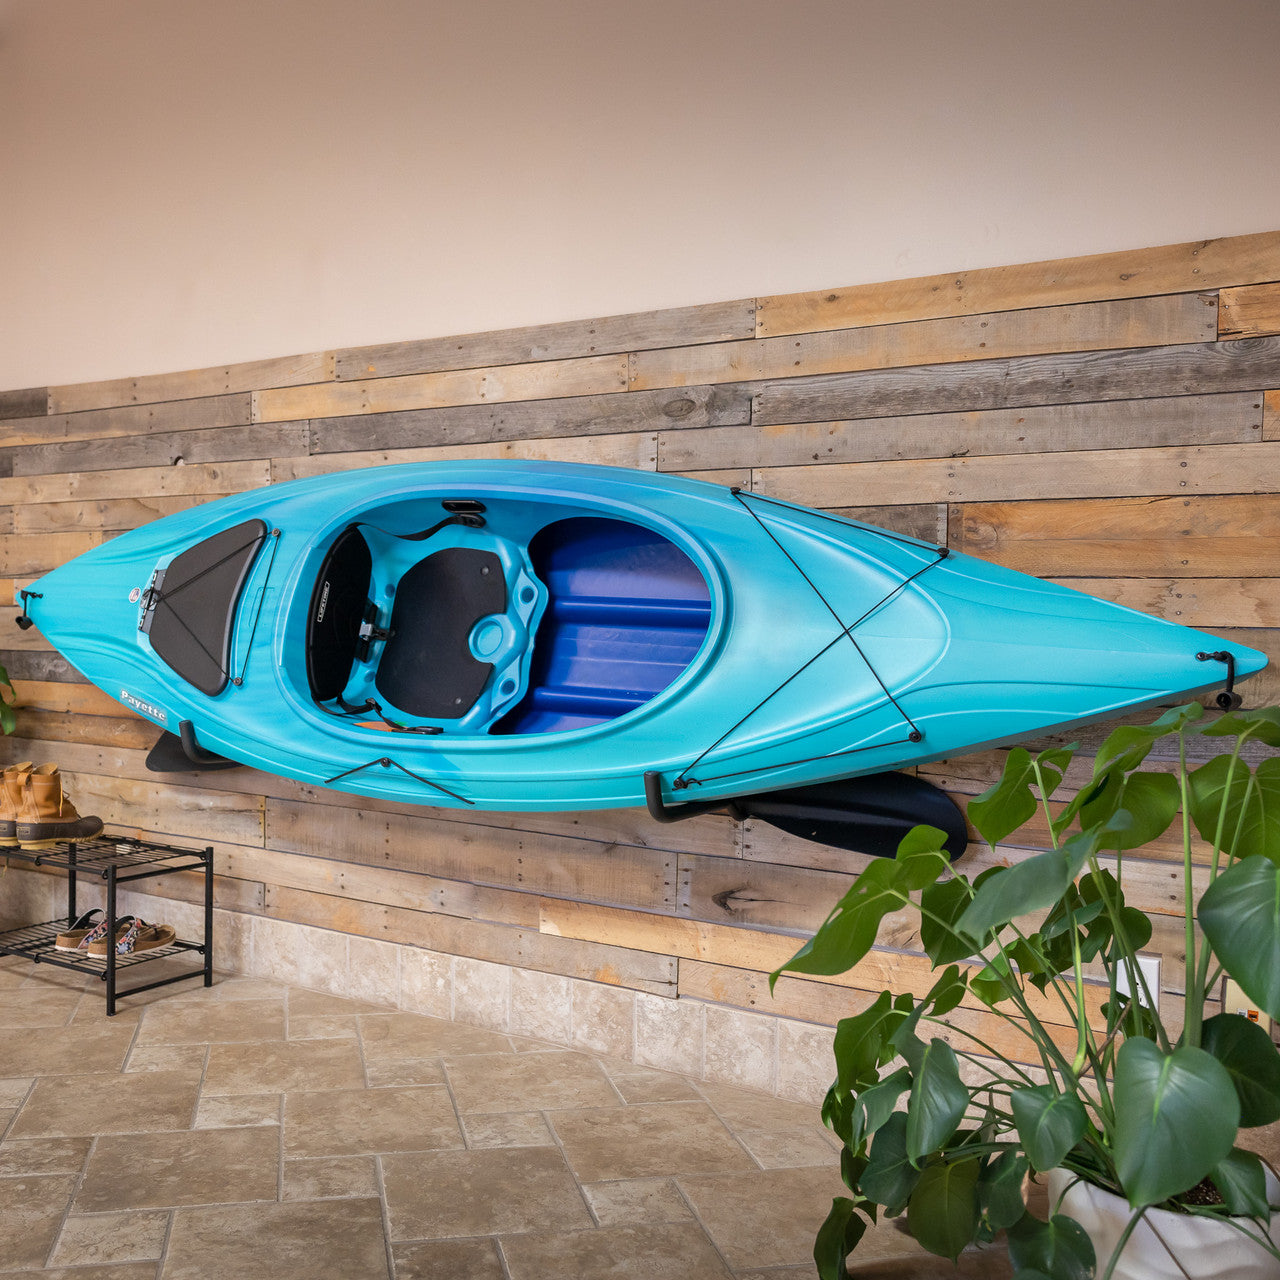 Suspenz Paddle Holder - Wall Mount - California Canoe & Kayak